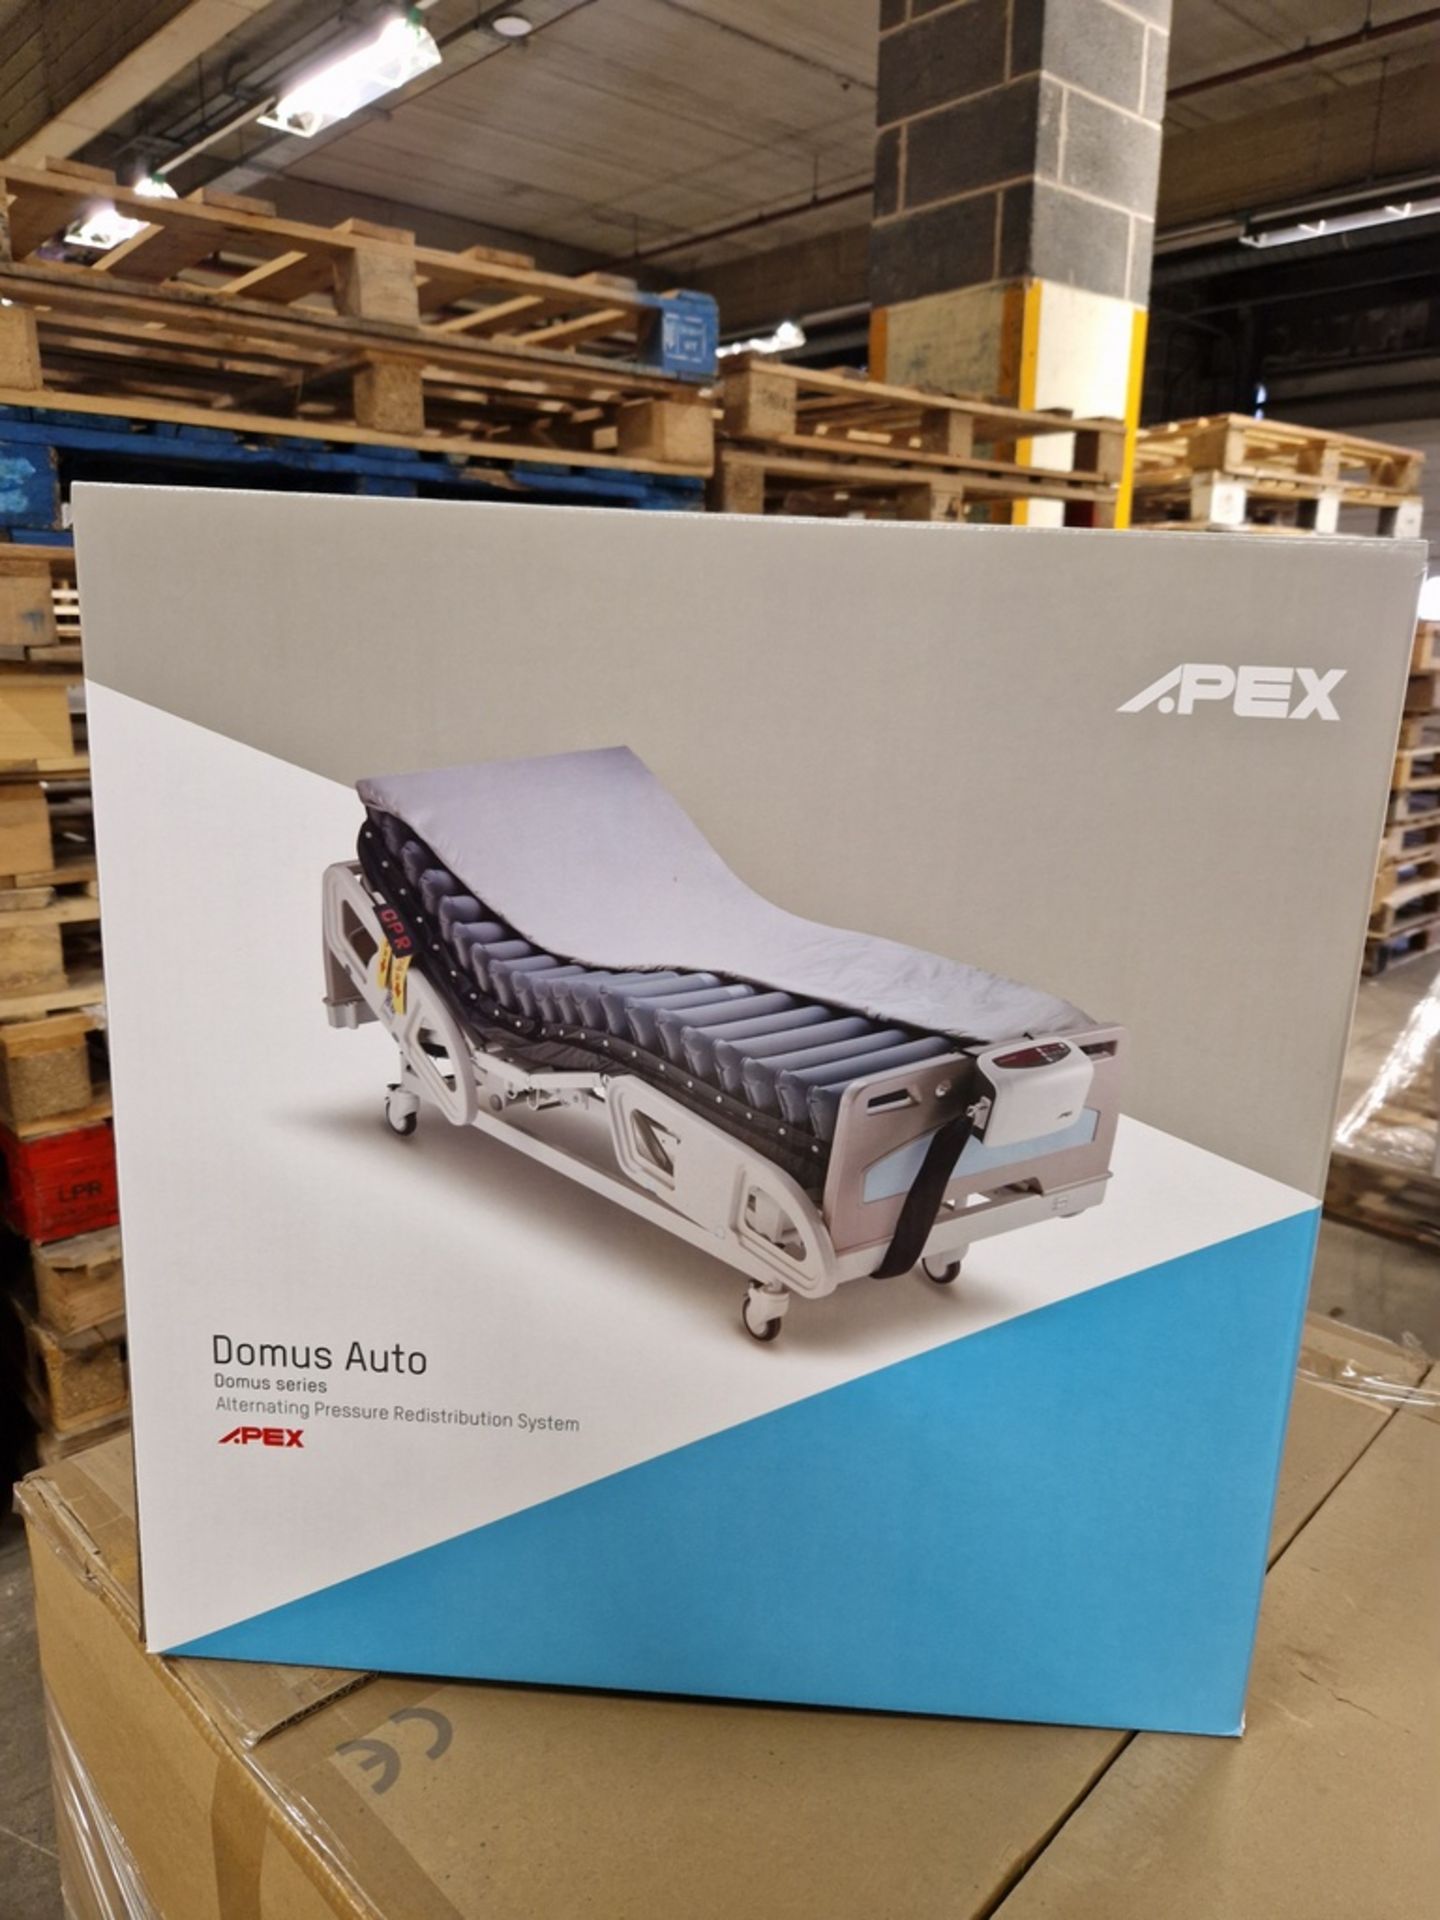 50x Apex Domus auto alternating pressure redistribution mattress and pump